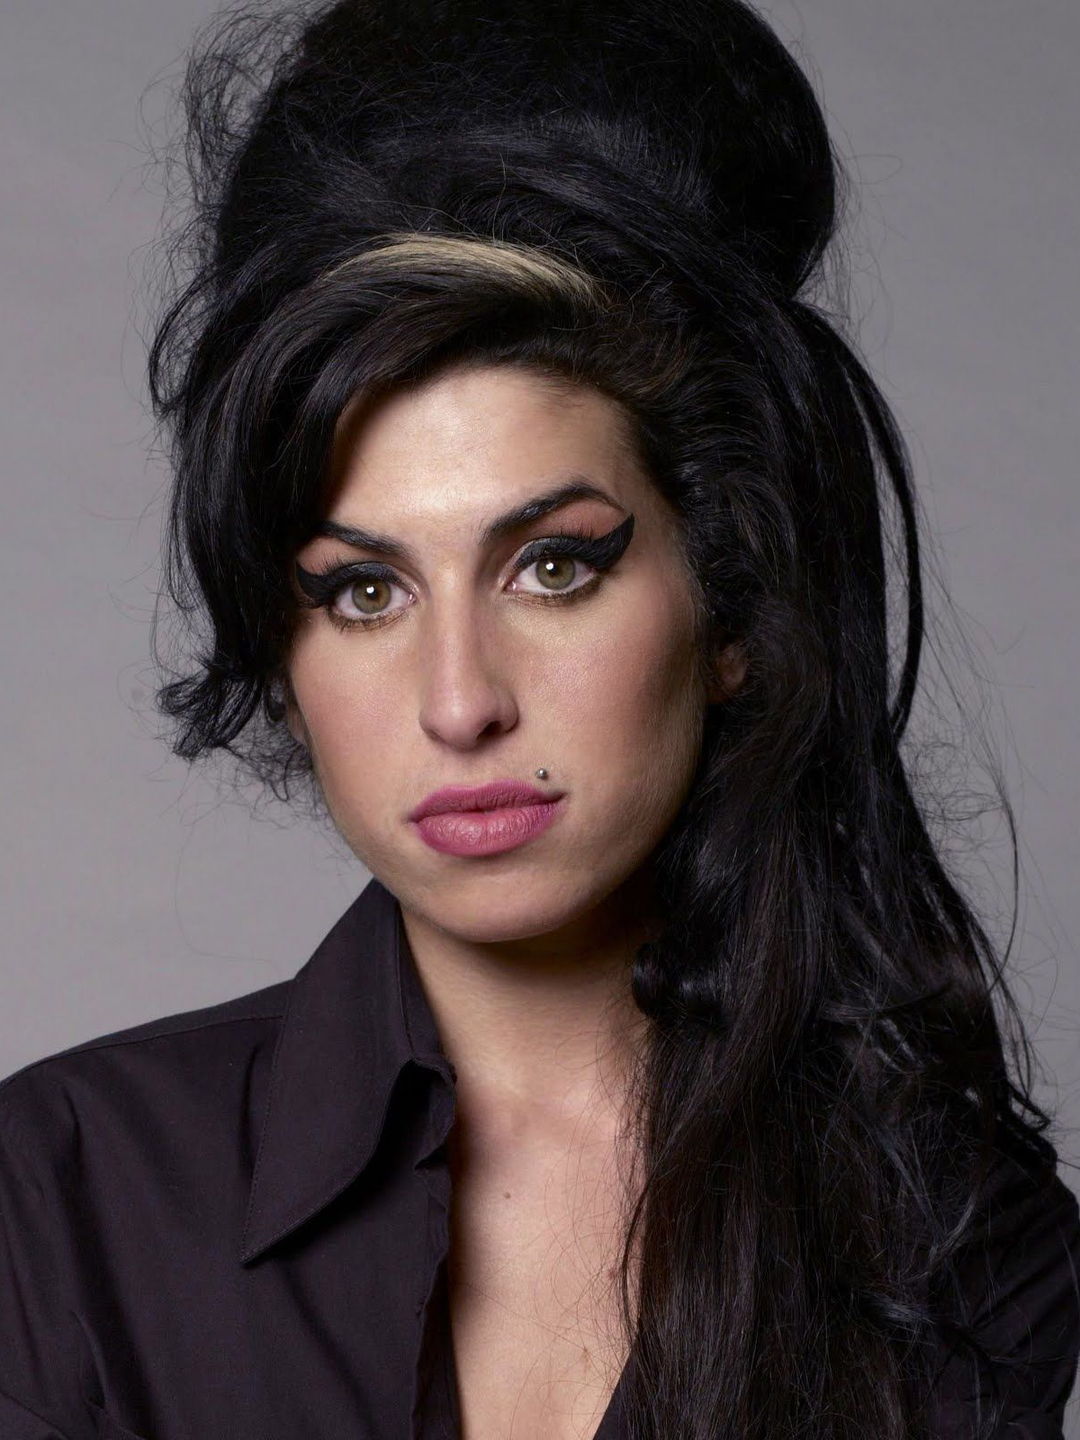 Amy Winehouse biography